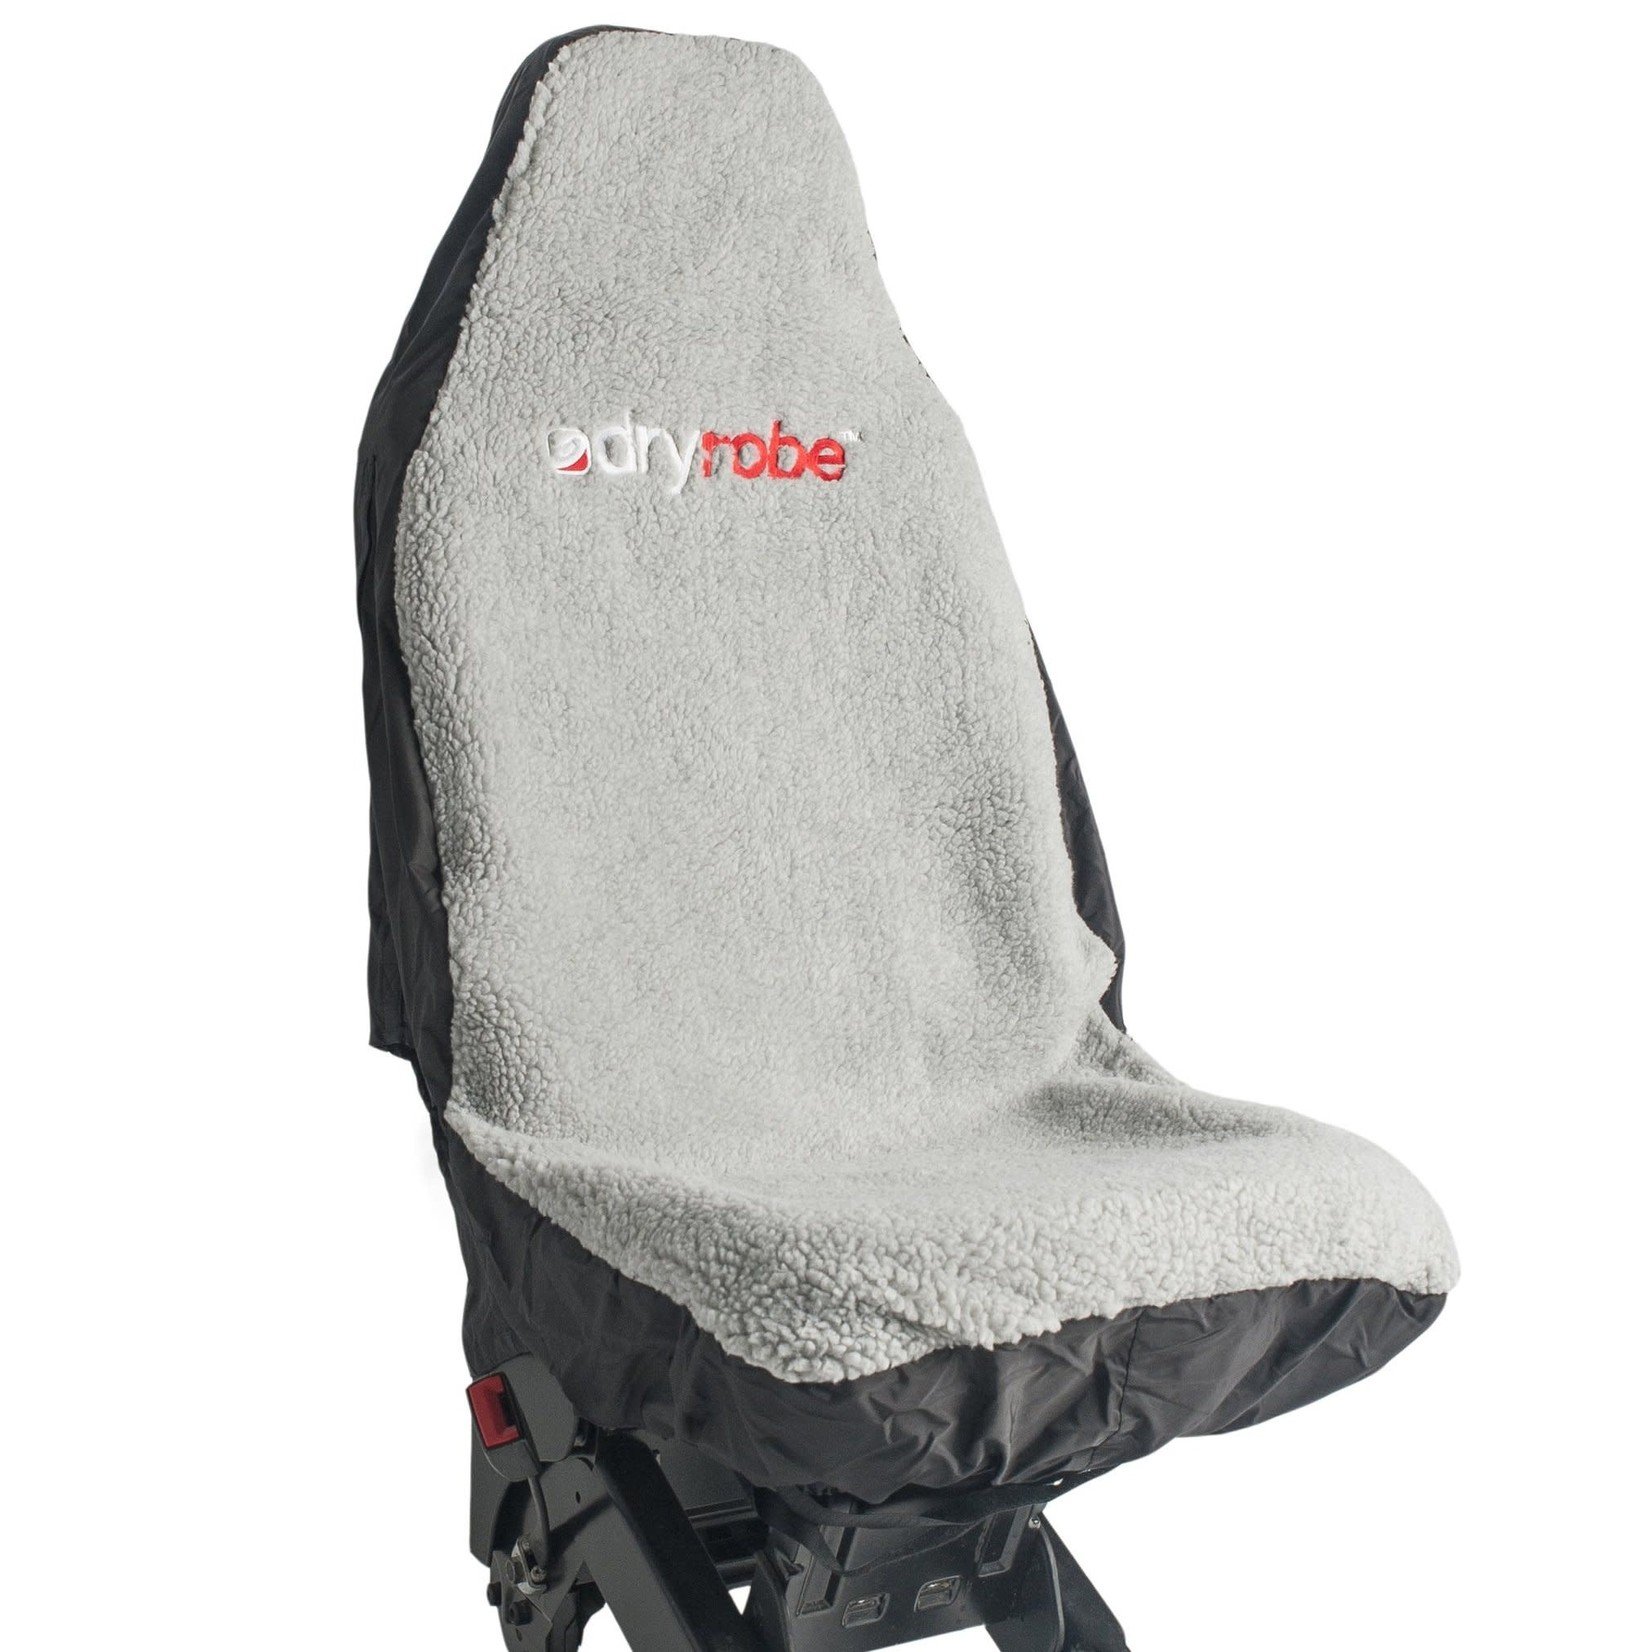 Dryrobe Dryrobe car seat cover